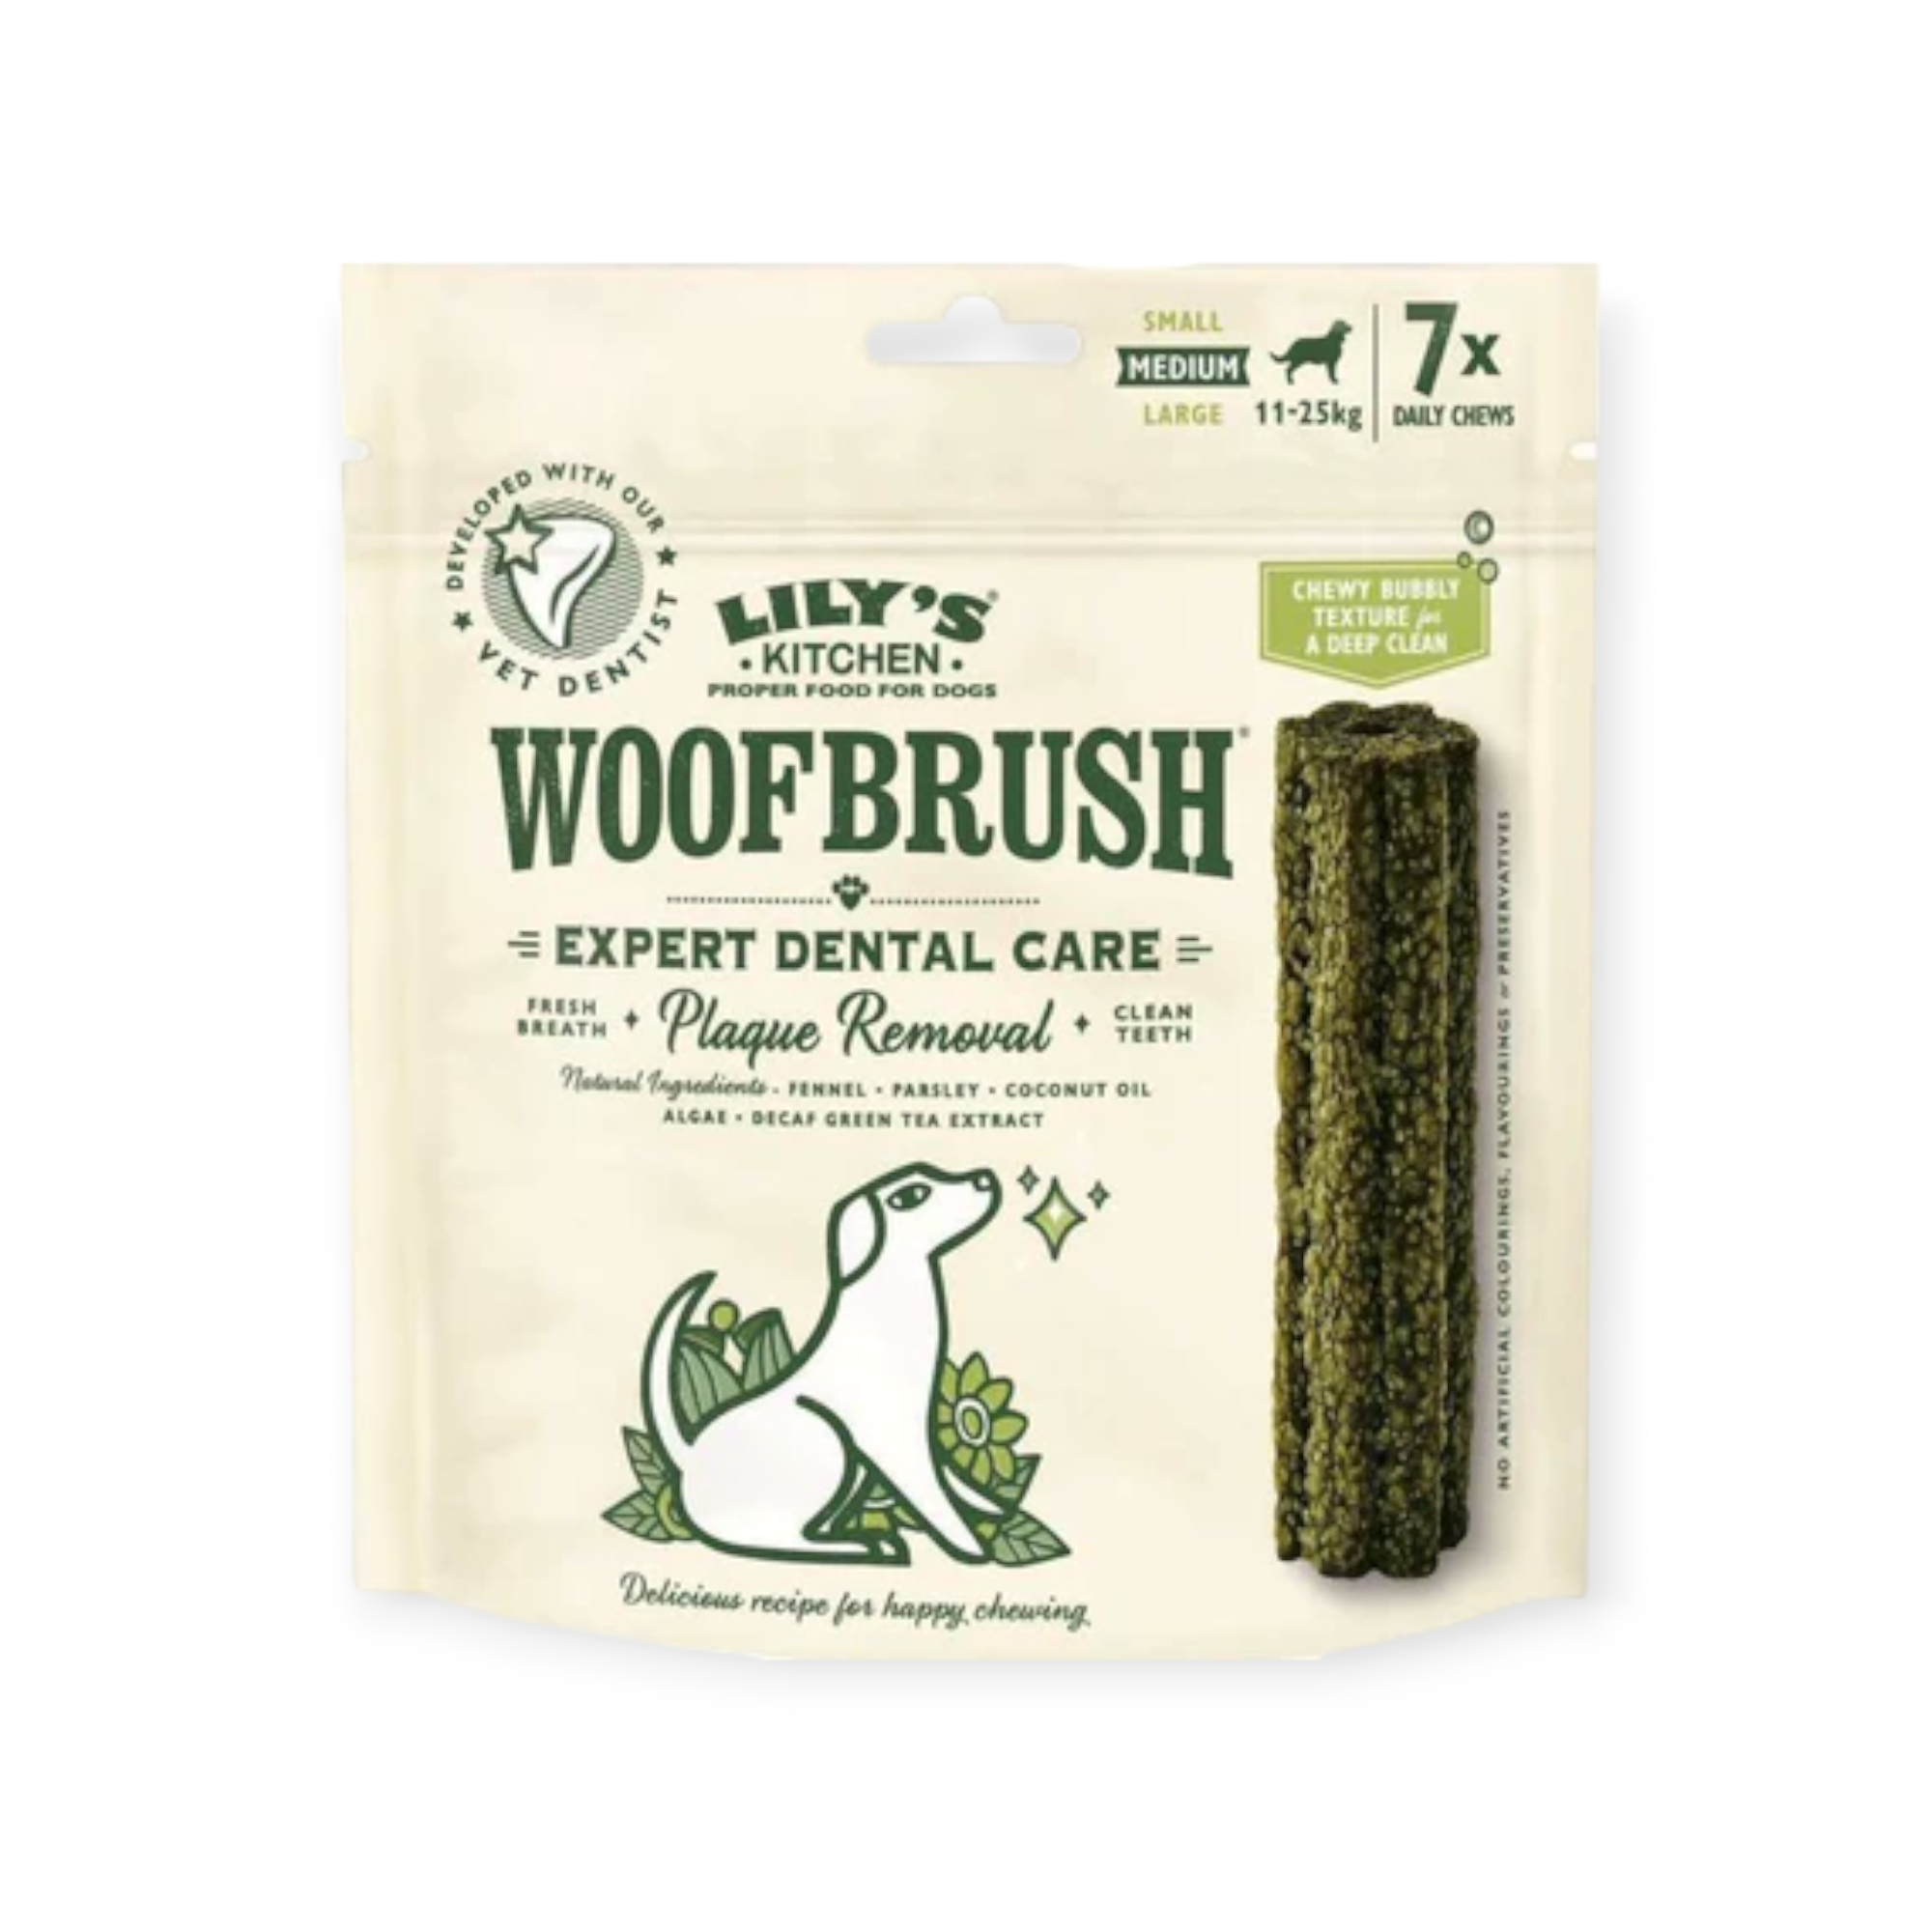 Woof Brush Dental Care